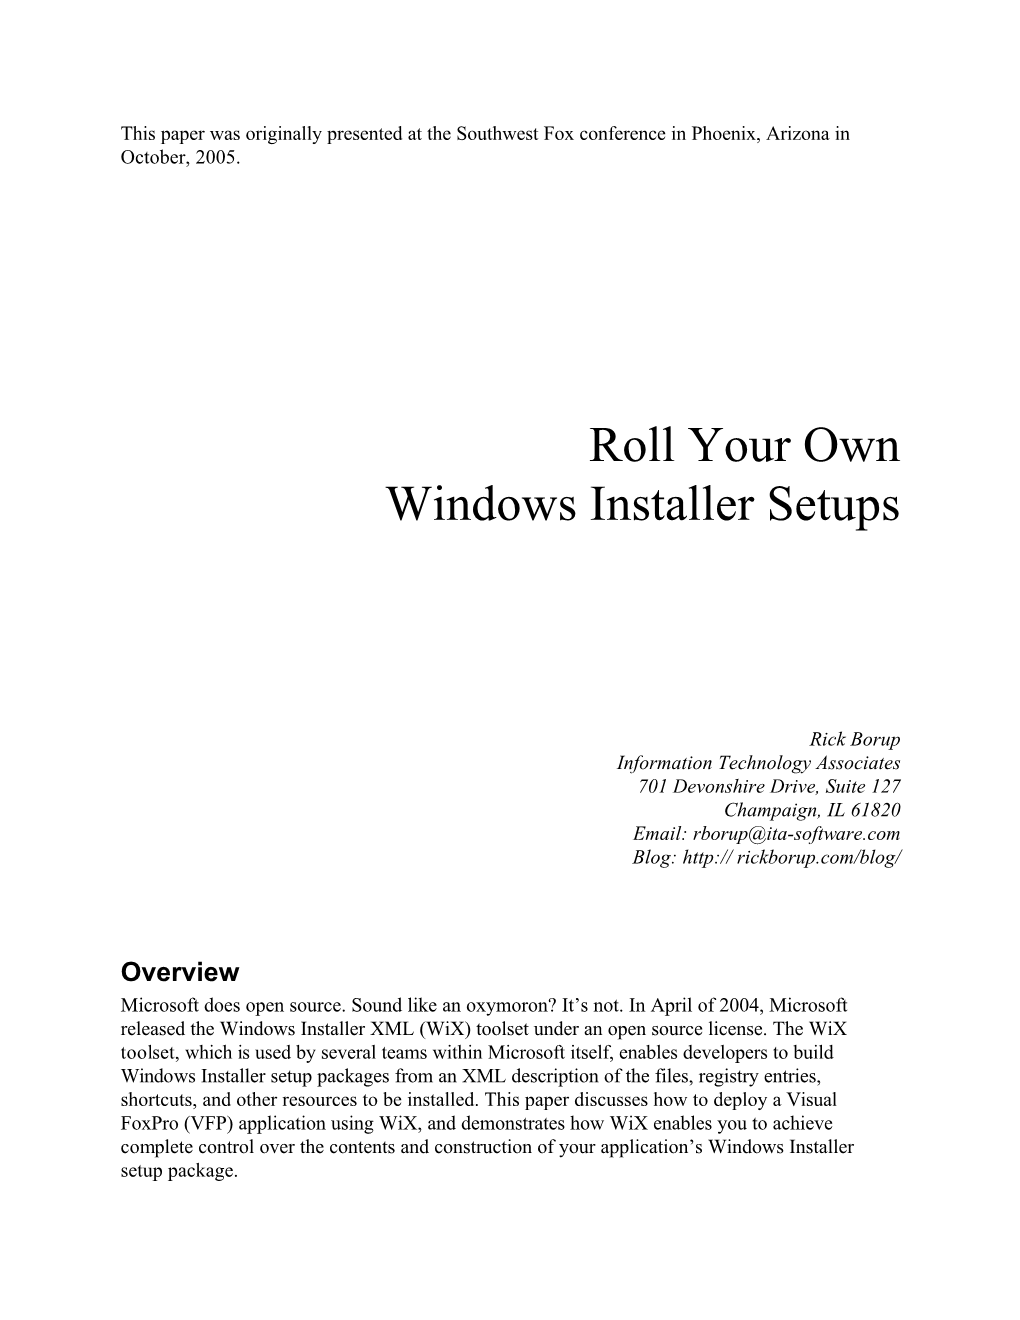 Roll Your Own Windows Installer Setups